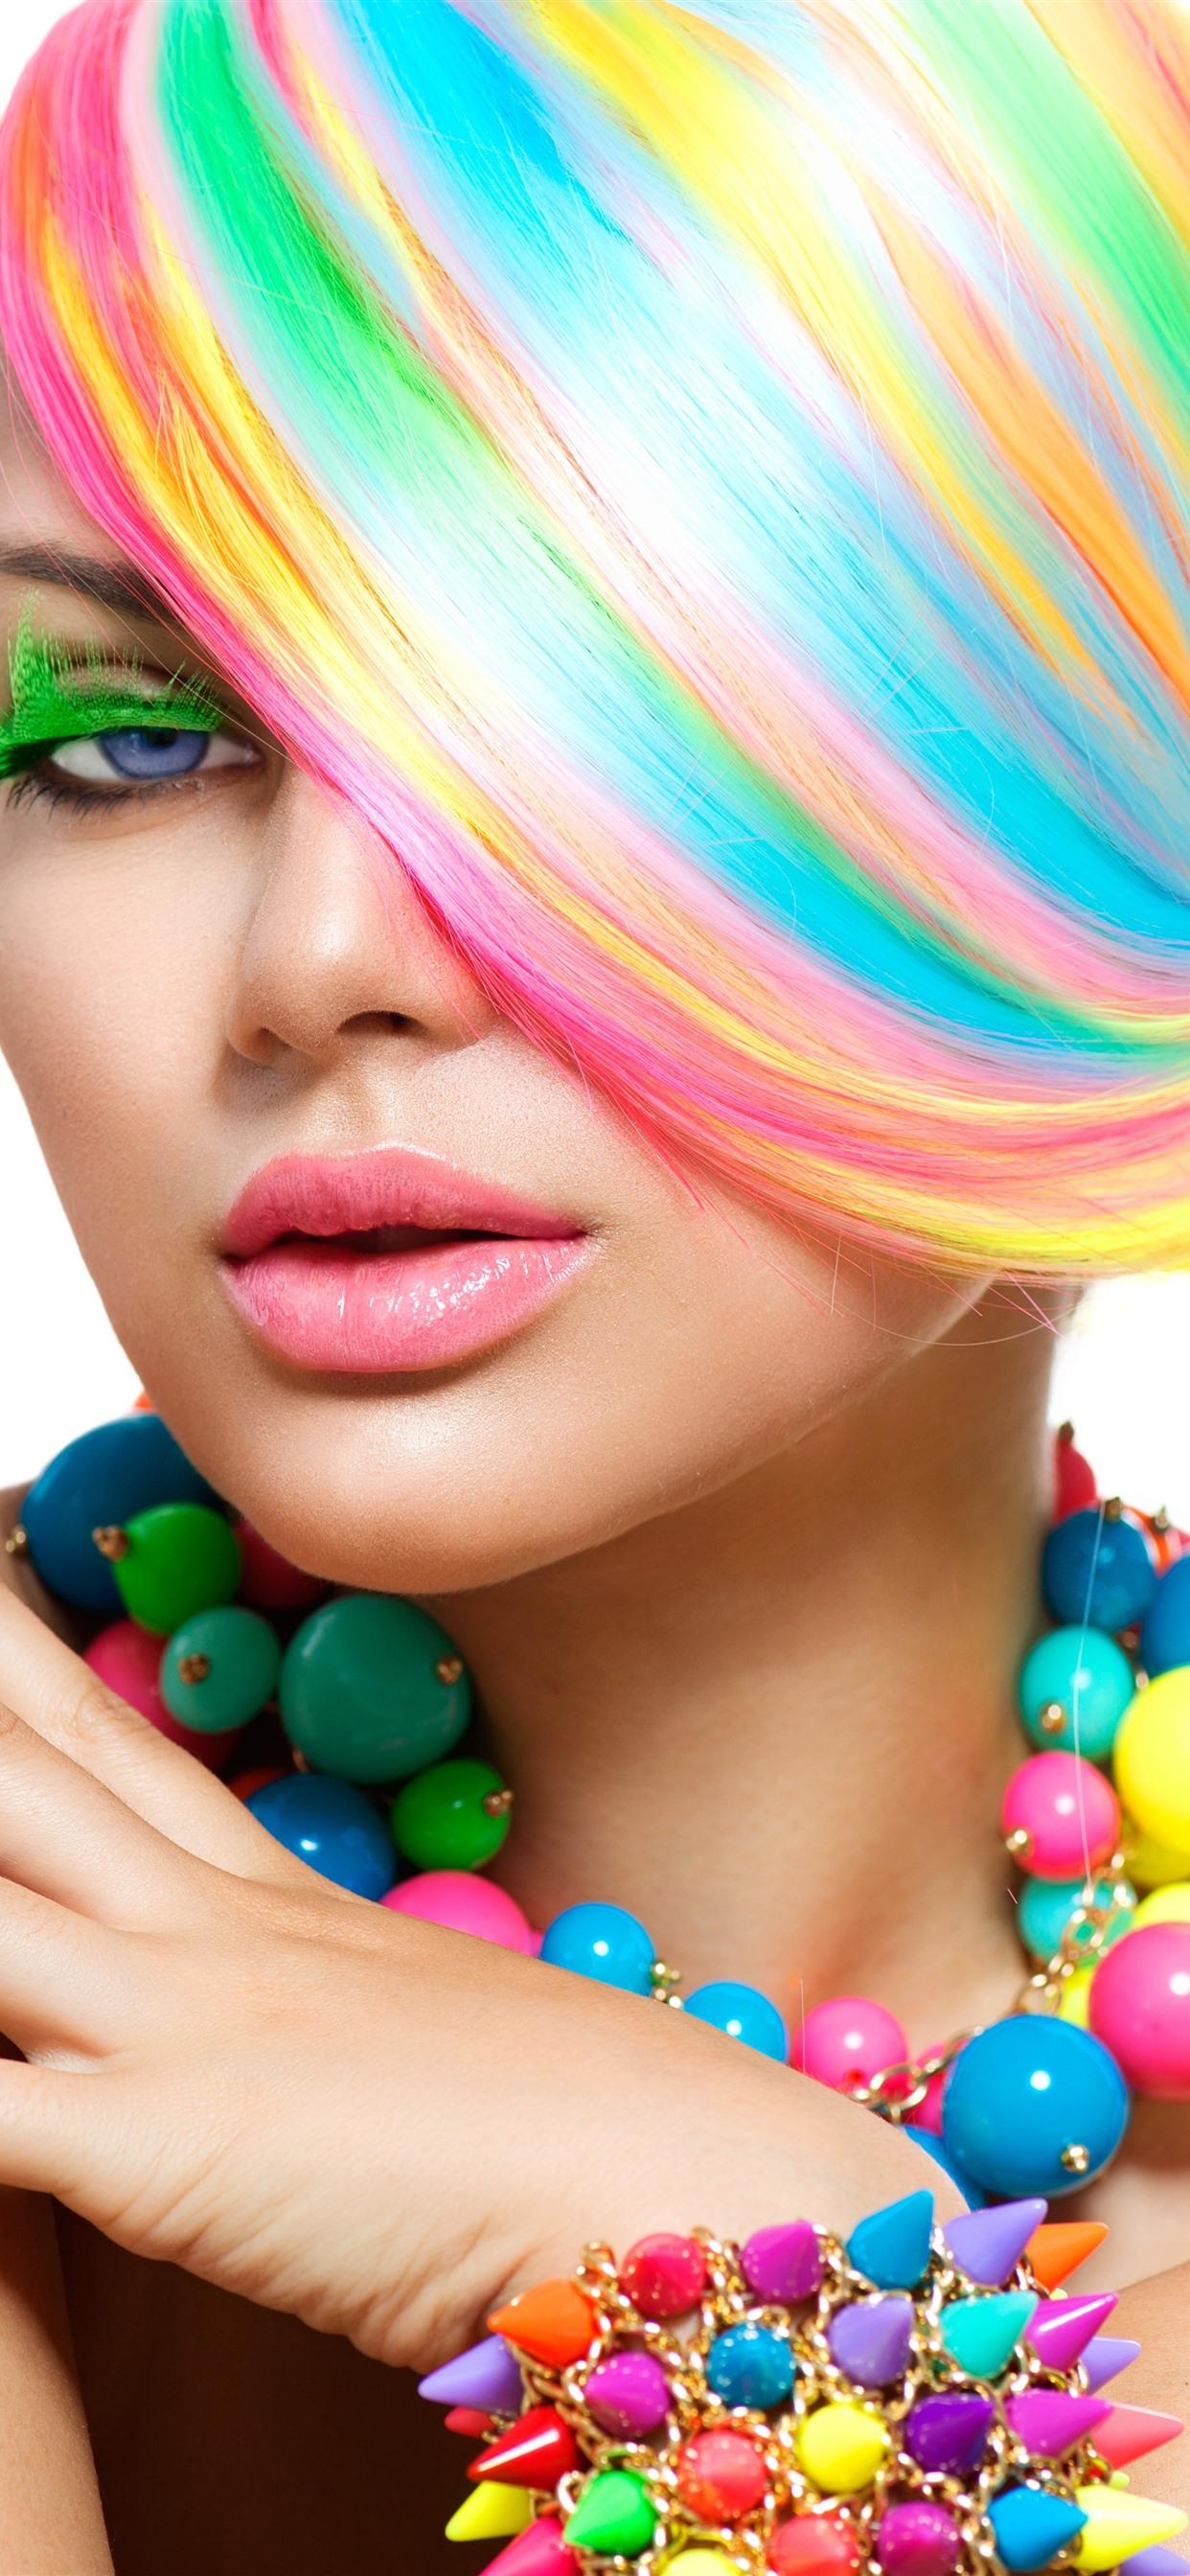 Fashion girl, rainbow colors hair, colorful beads 1242x2688 iPhone